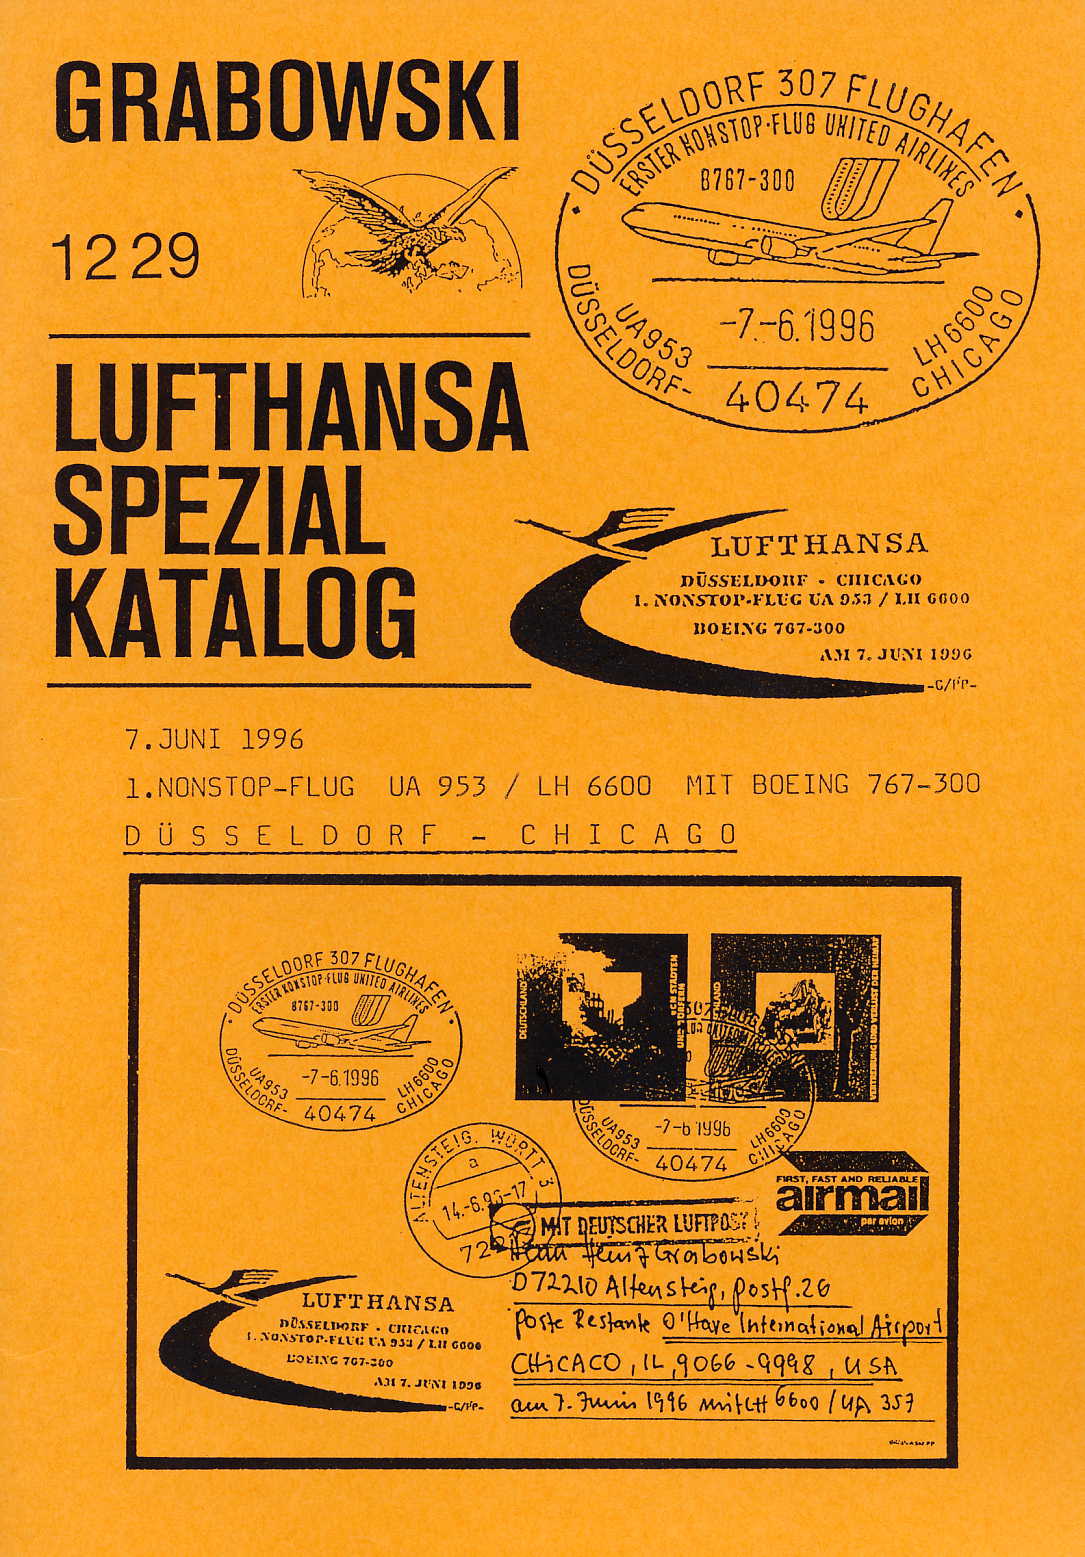 Grabowski Lufthansa-Spezialkatalog Flug Nr. 1229